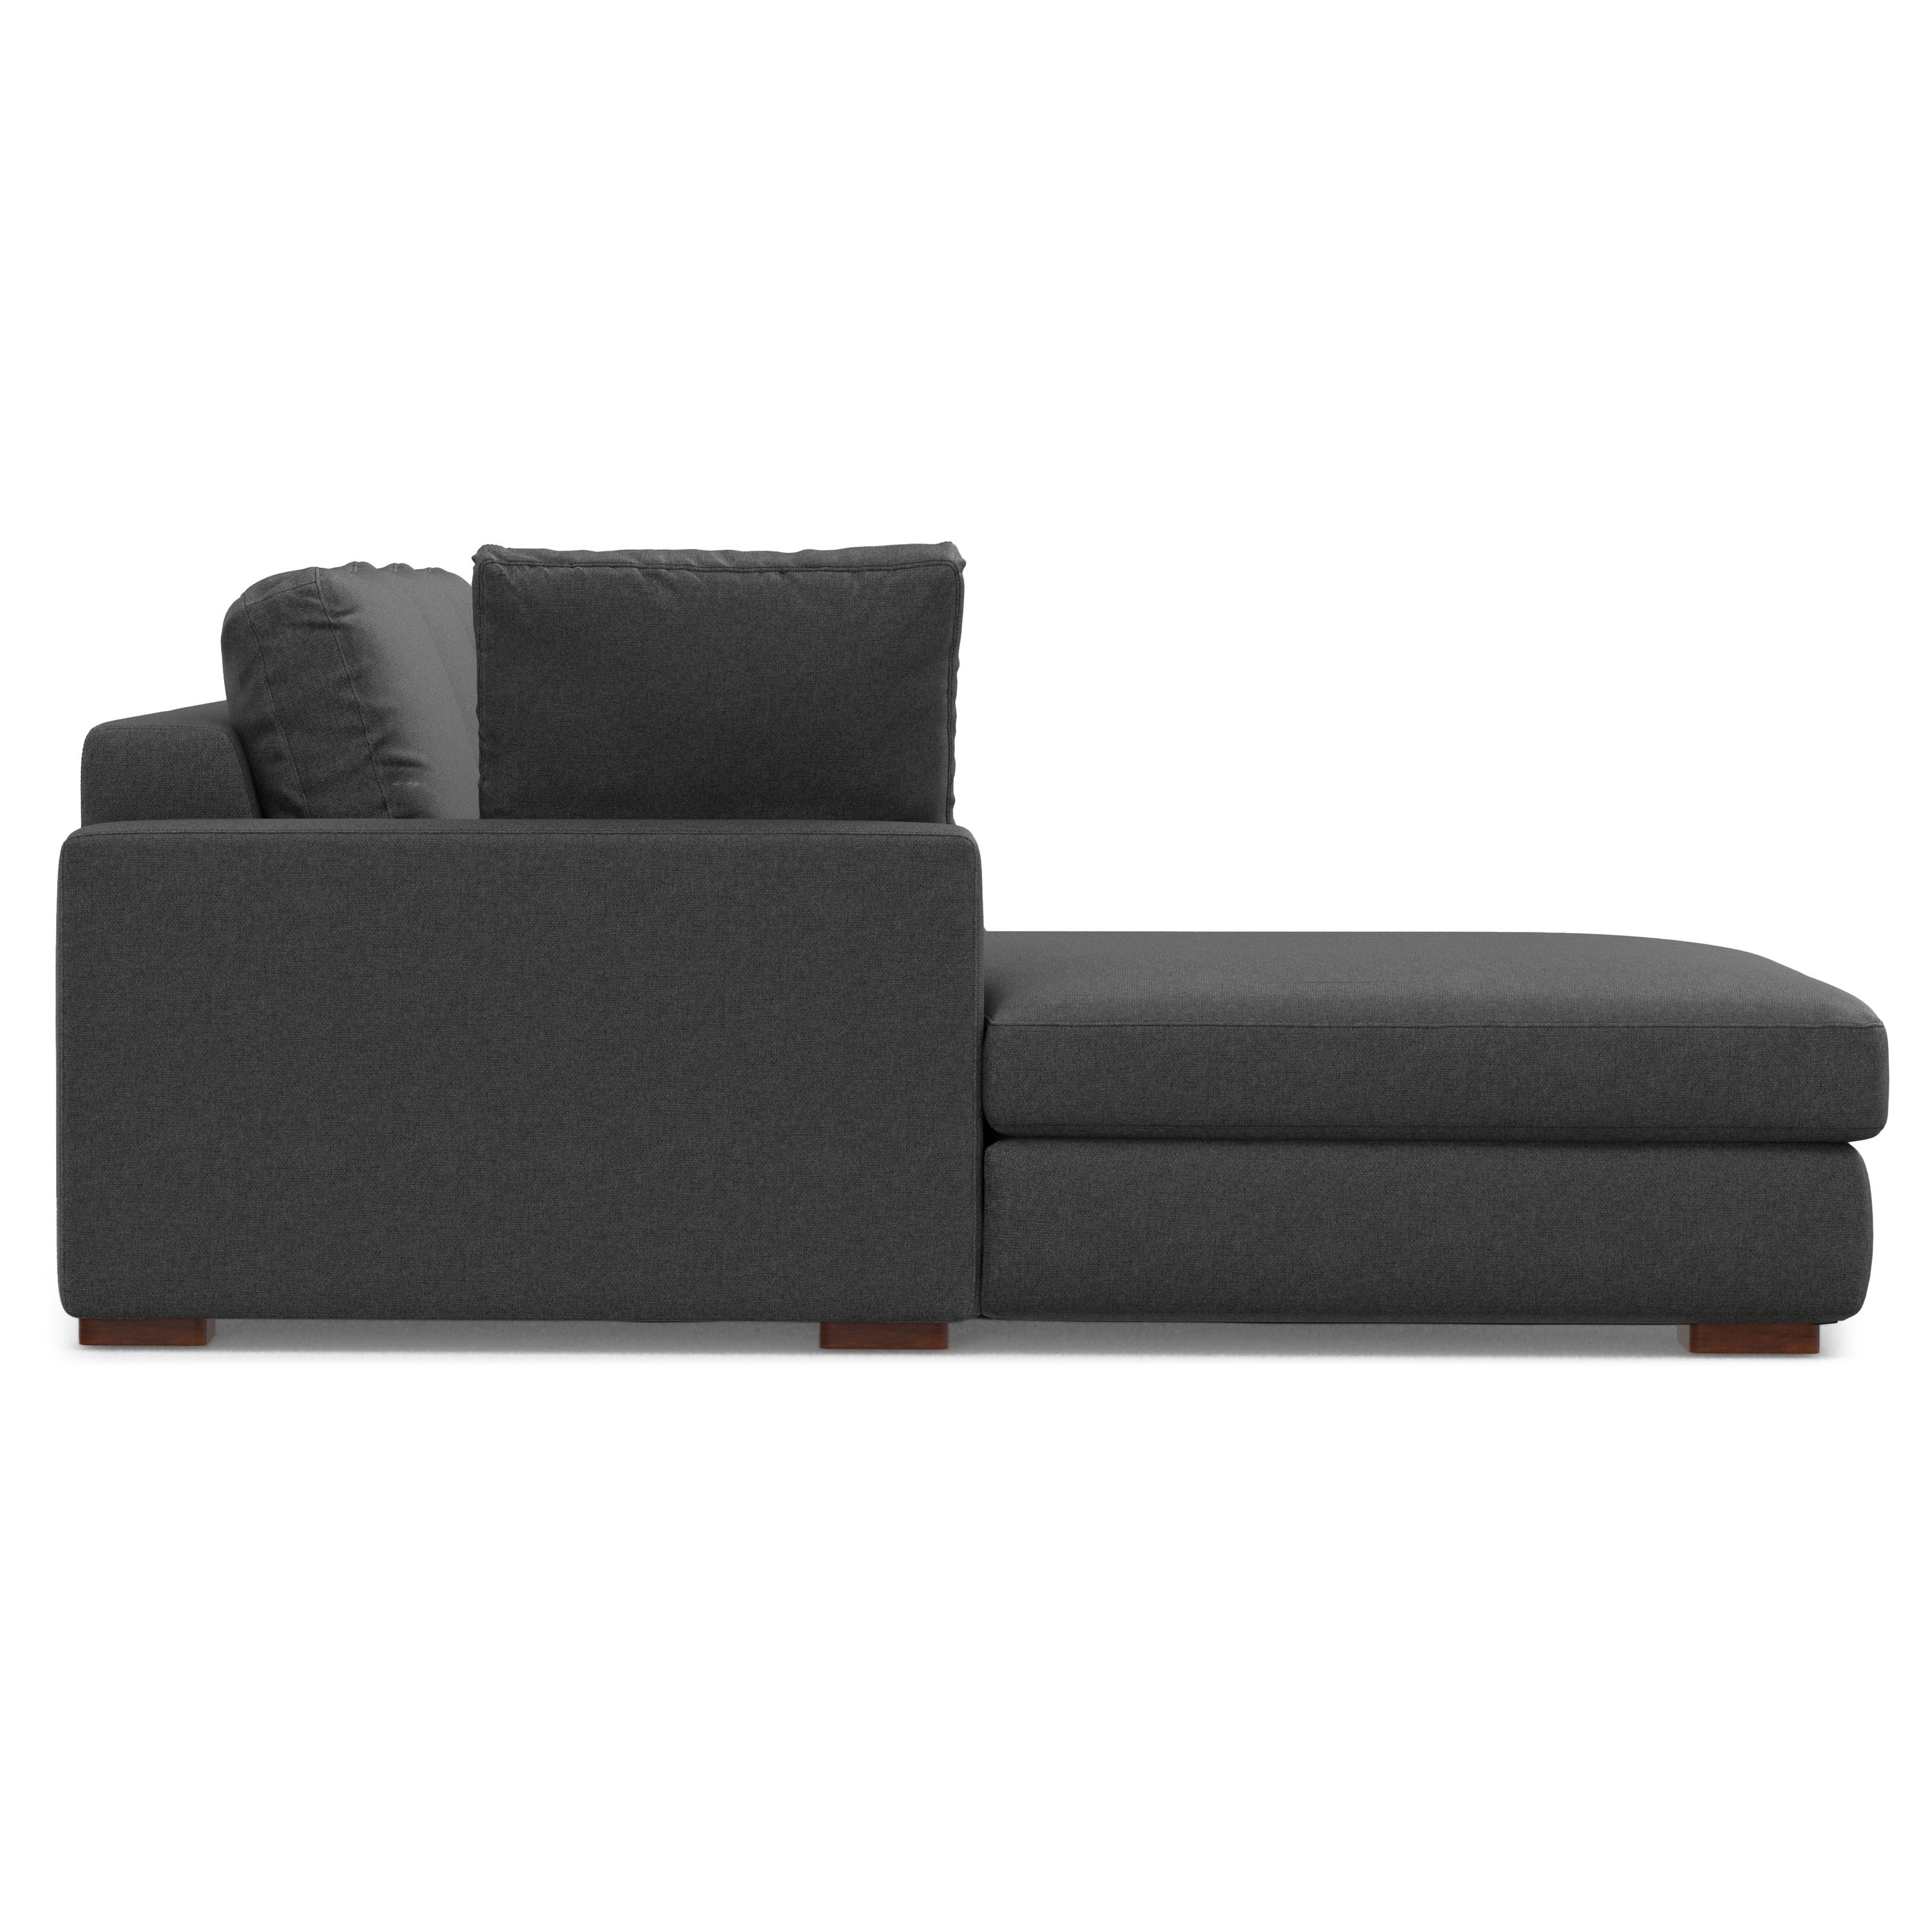 Charlie - Deep Seater Sectional Sofa